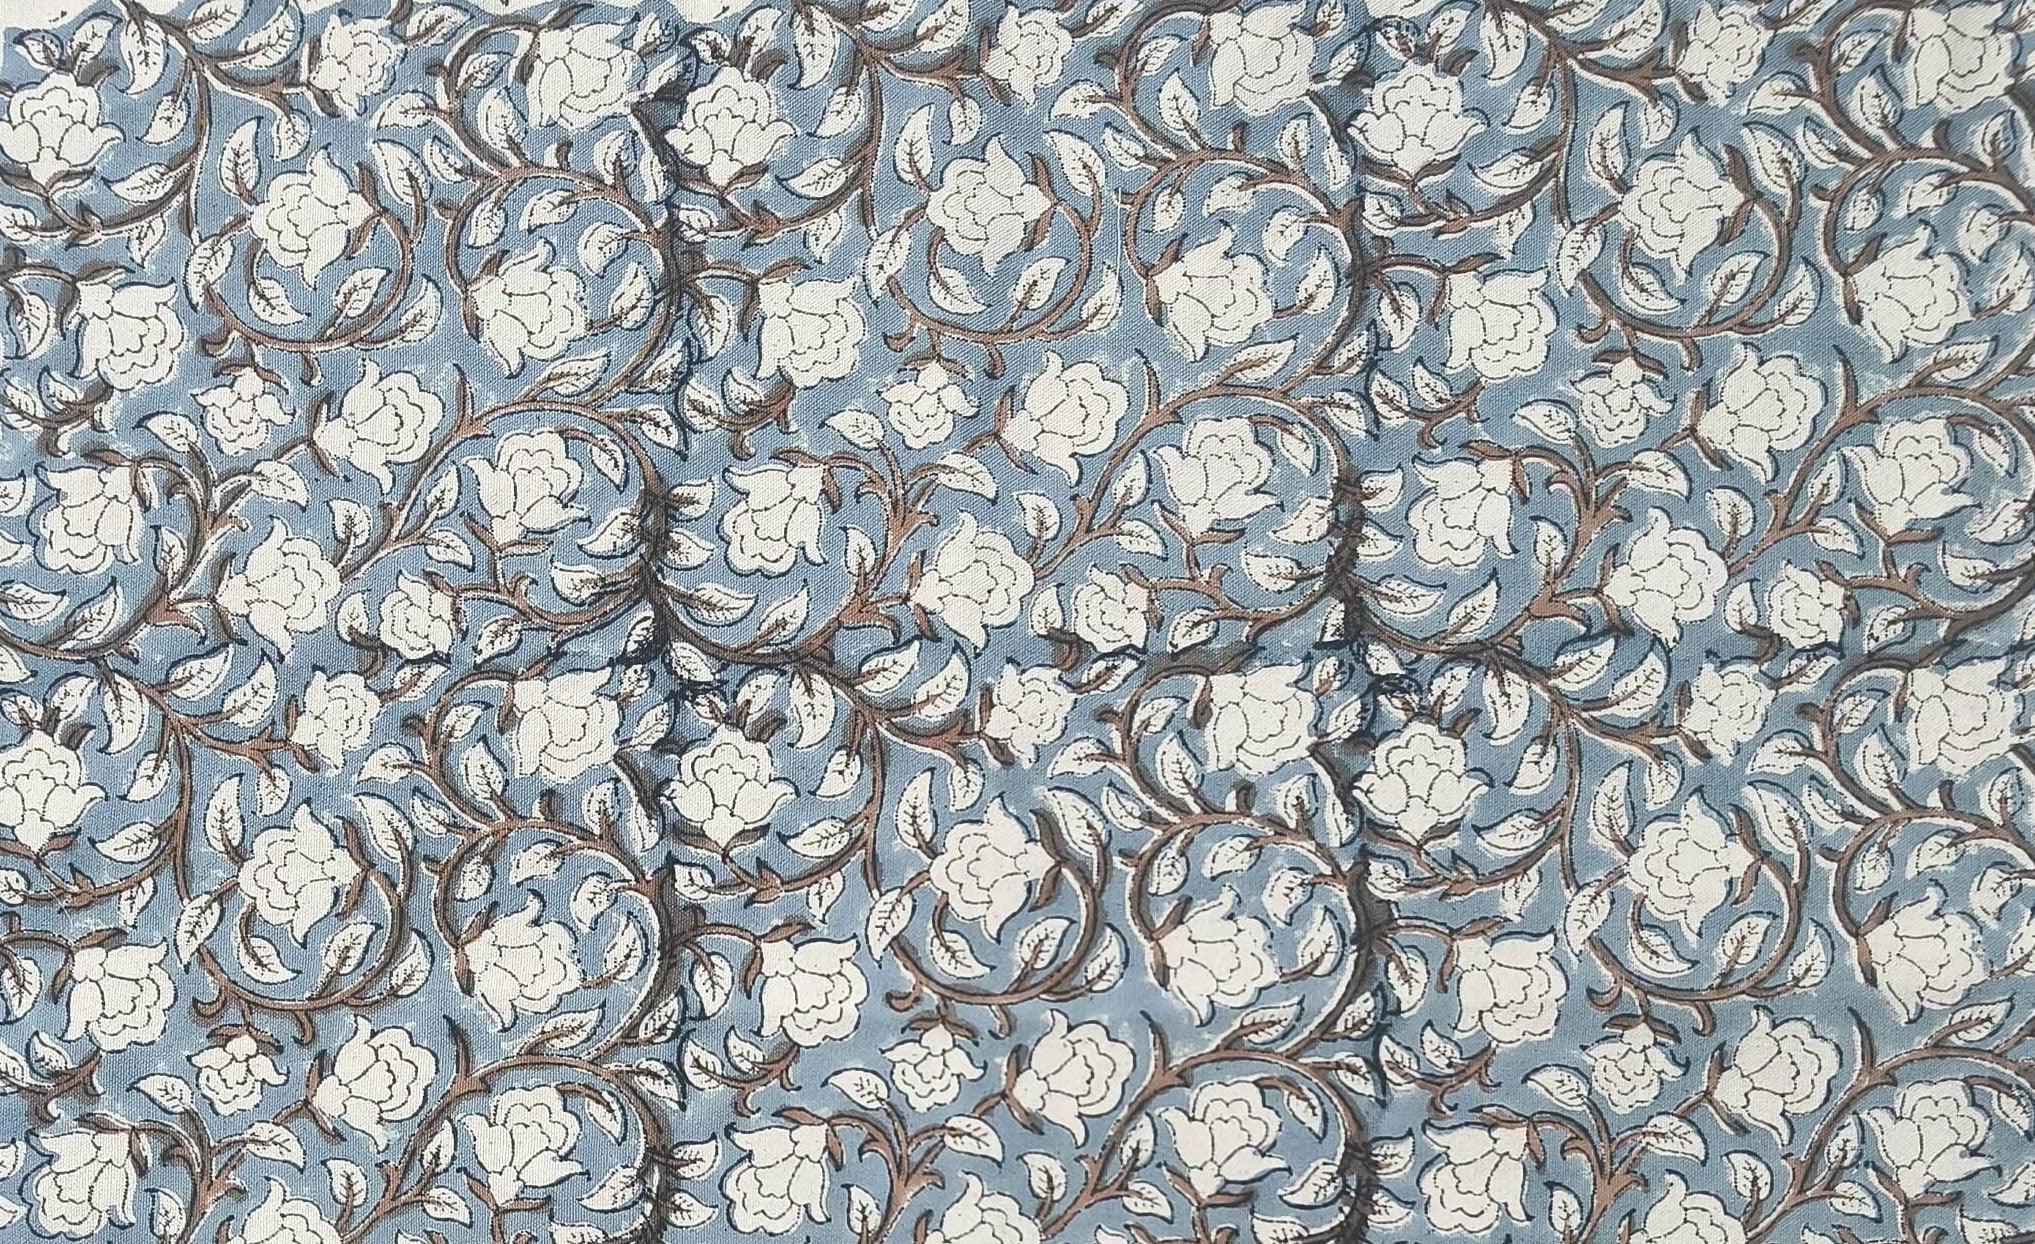 Amritvela Grey  Linen Fabric, Block Print Fabric, India Fabric, Luxury Fabric By The Yard, Linen Tablecloth Fabric  100% Natural Linen